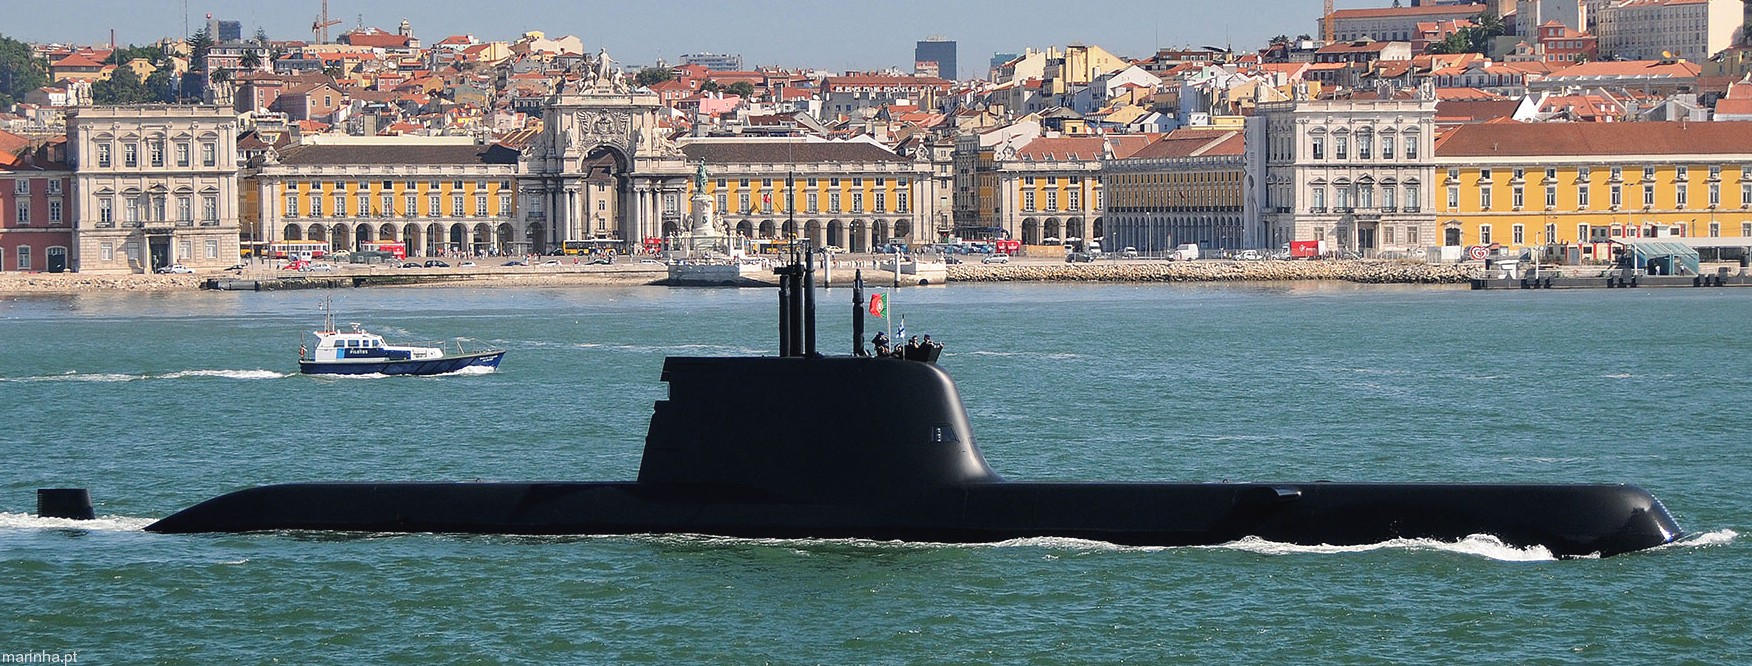 s-160 nrp tridente class type 209pn attack submarine ssk aip portuguese navy marinha 15